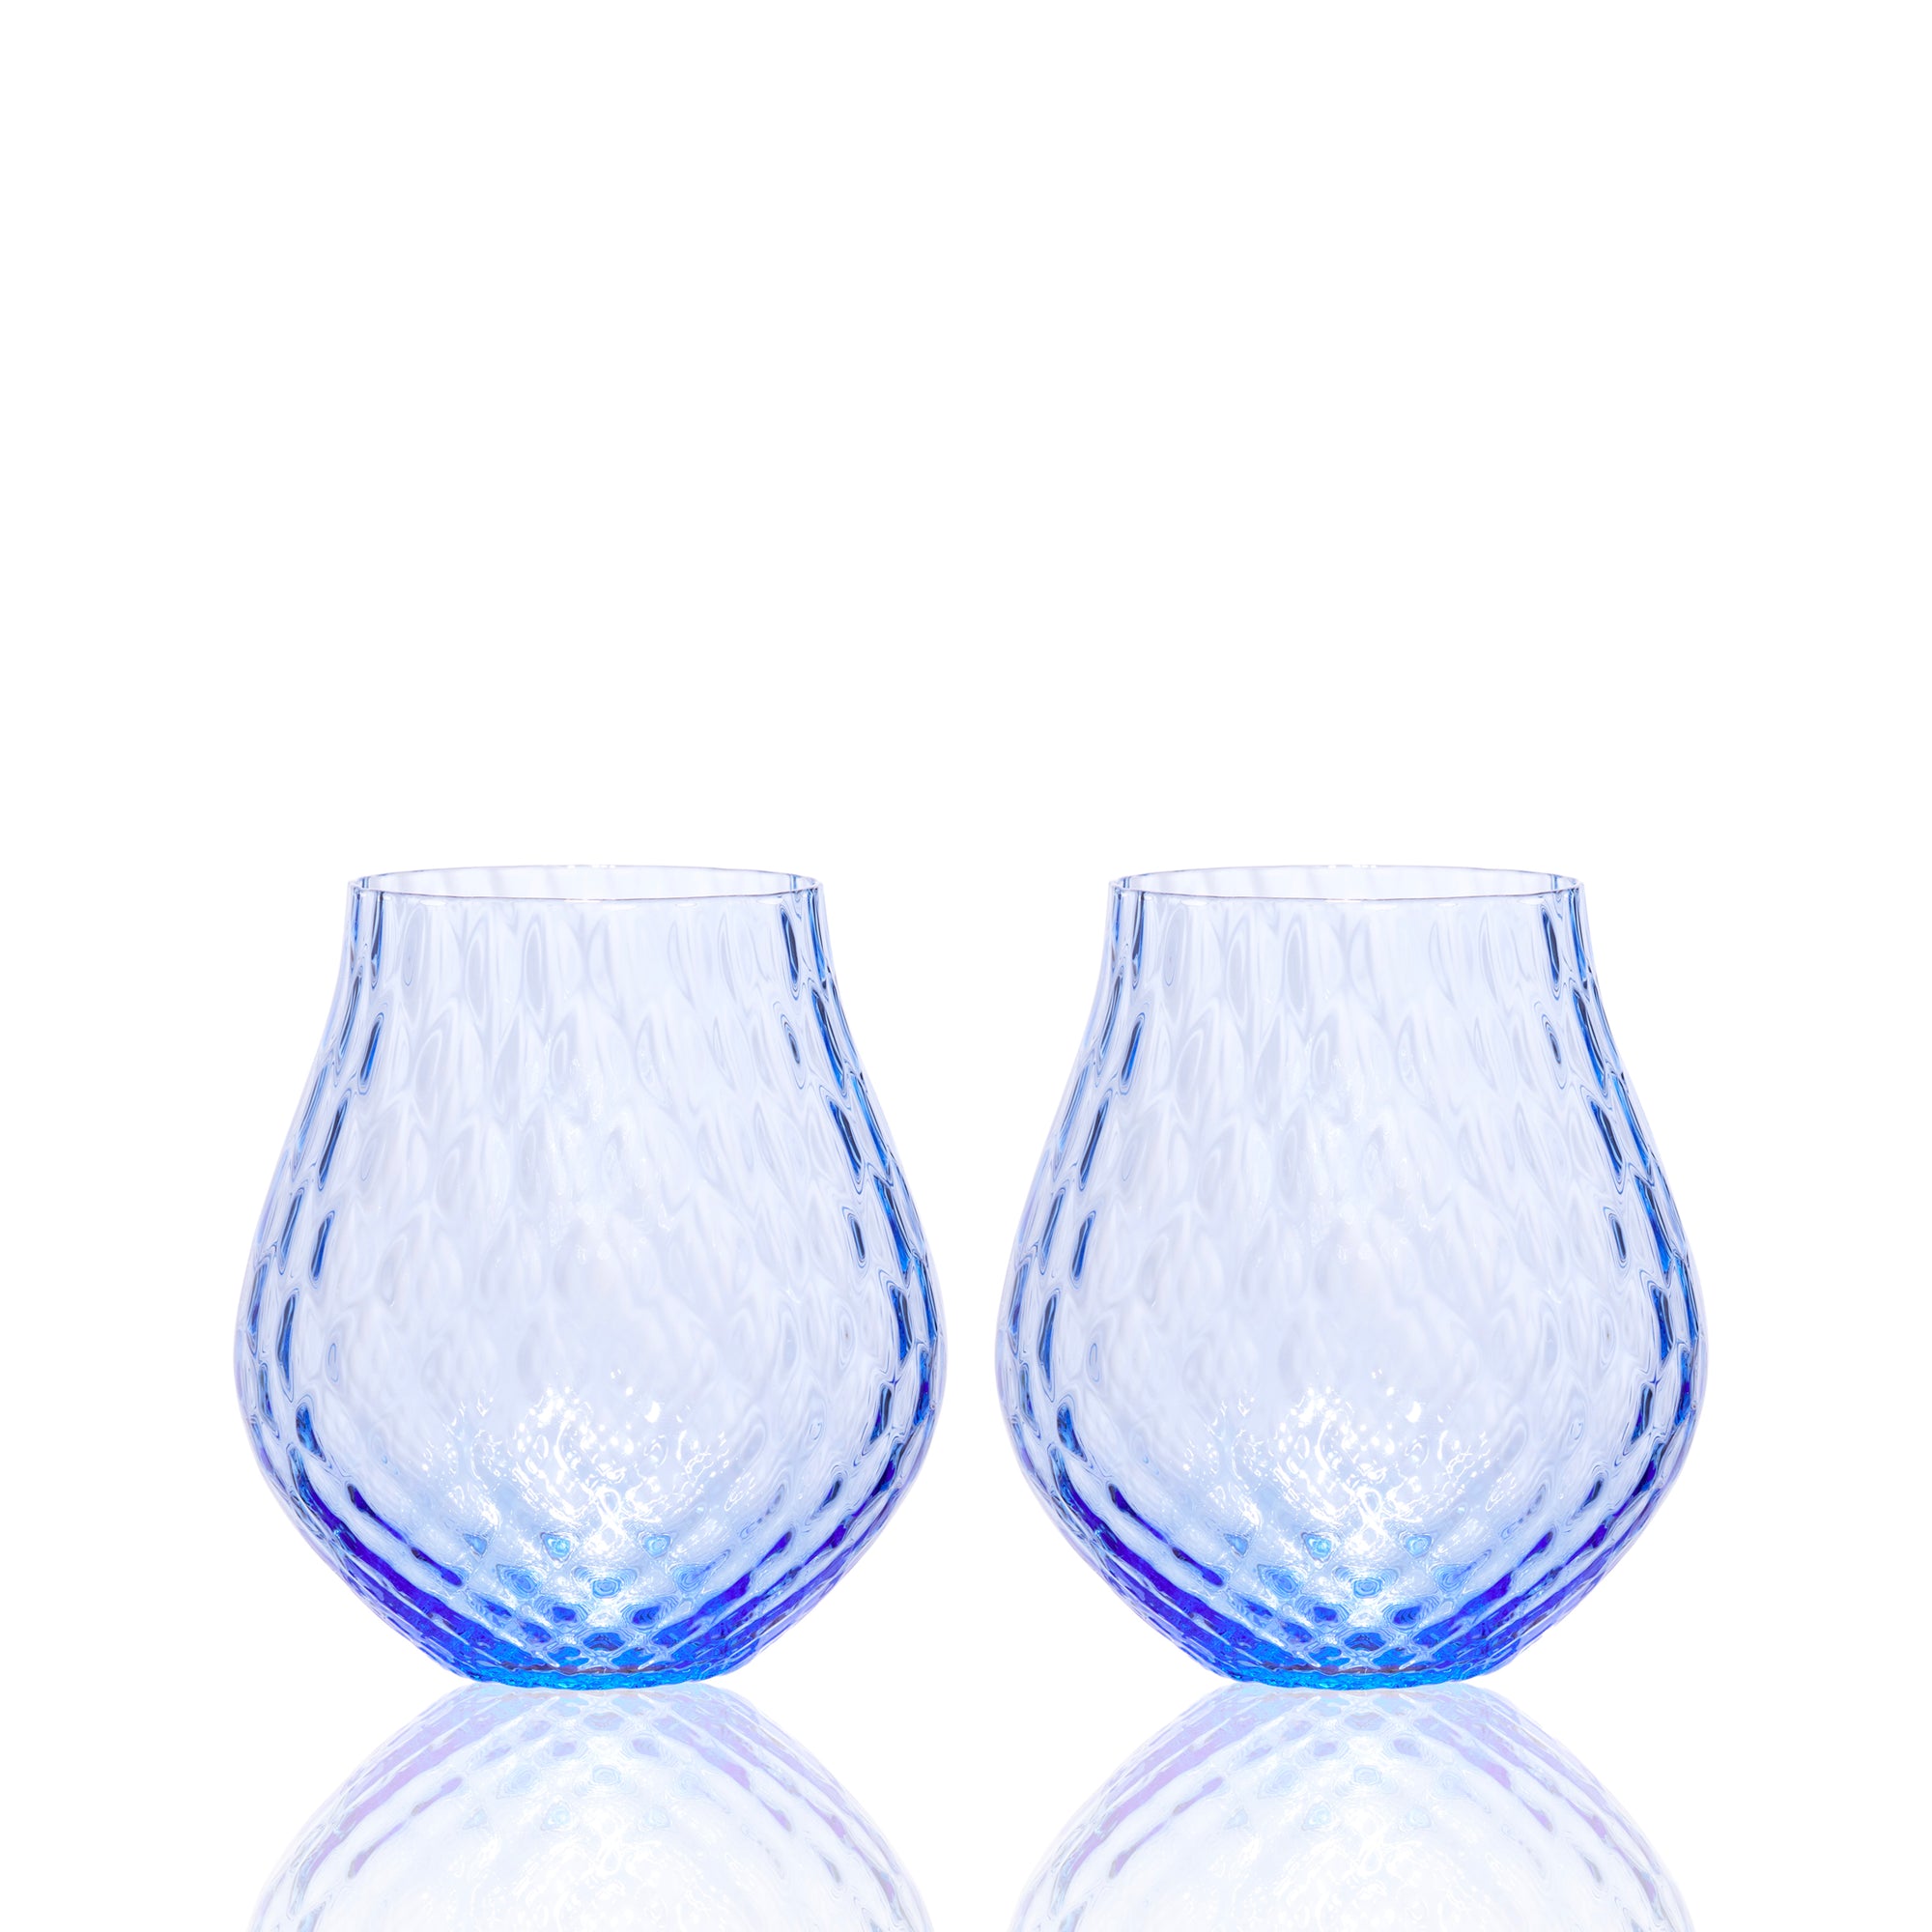 Phoebe cobalt blue stemless tulip crystal wine glasses from Caskata.